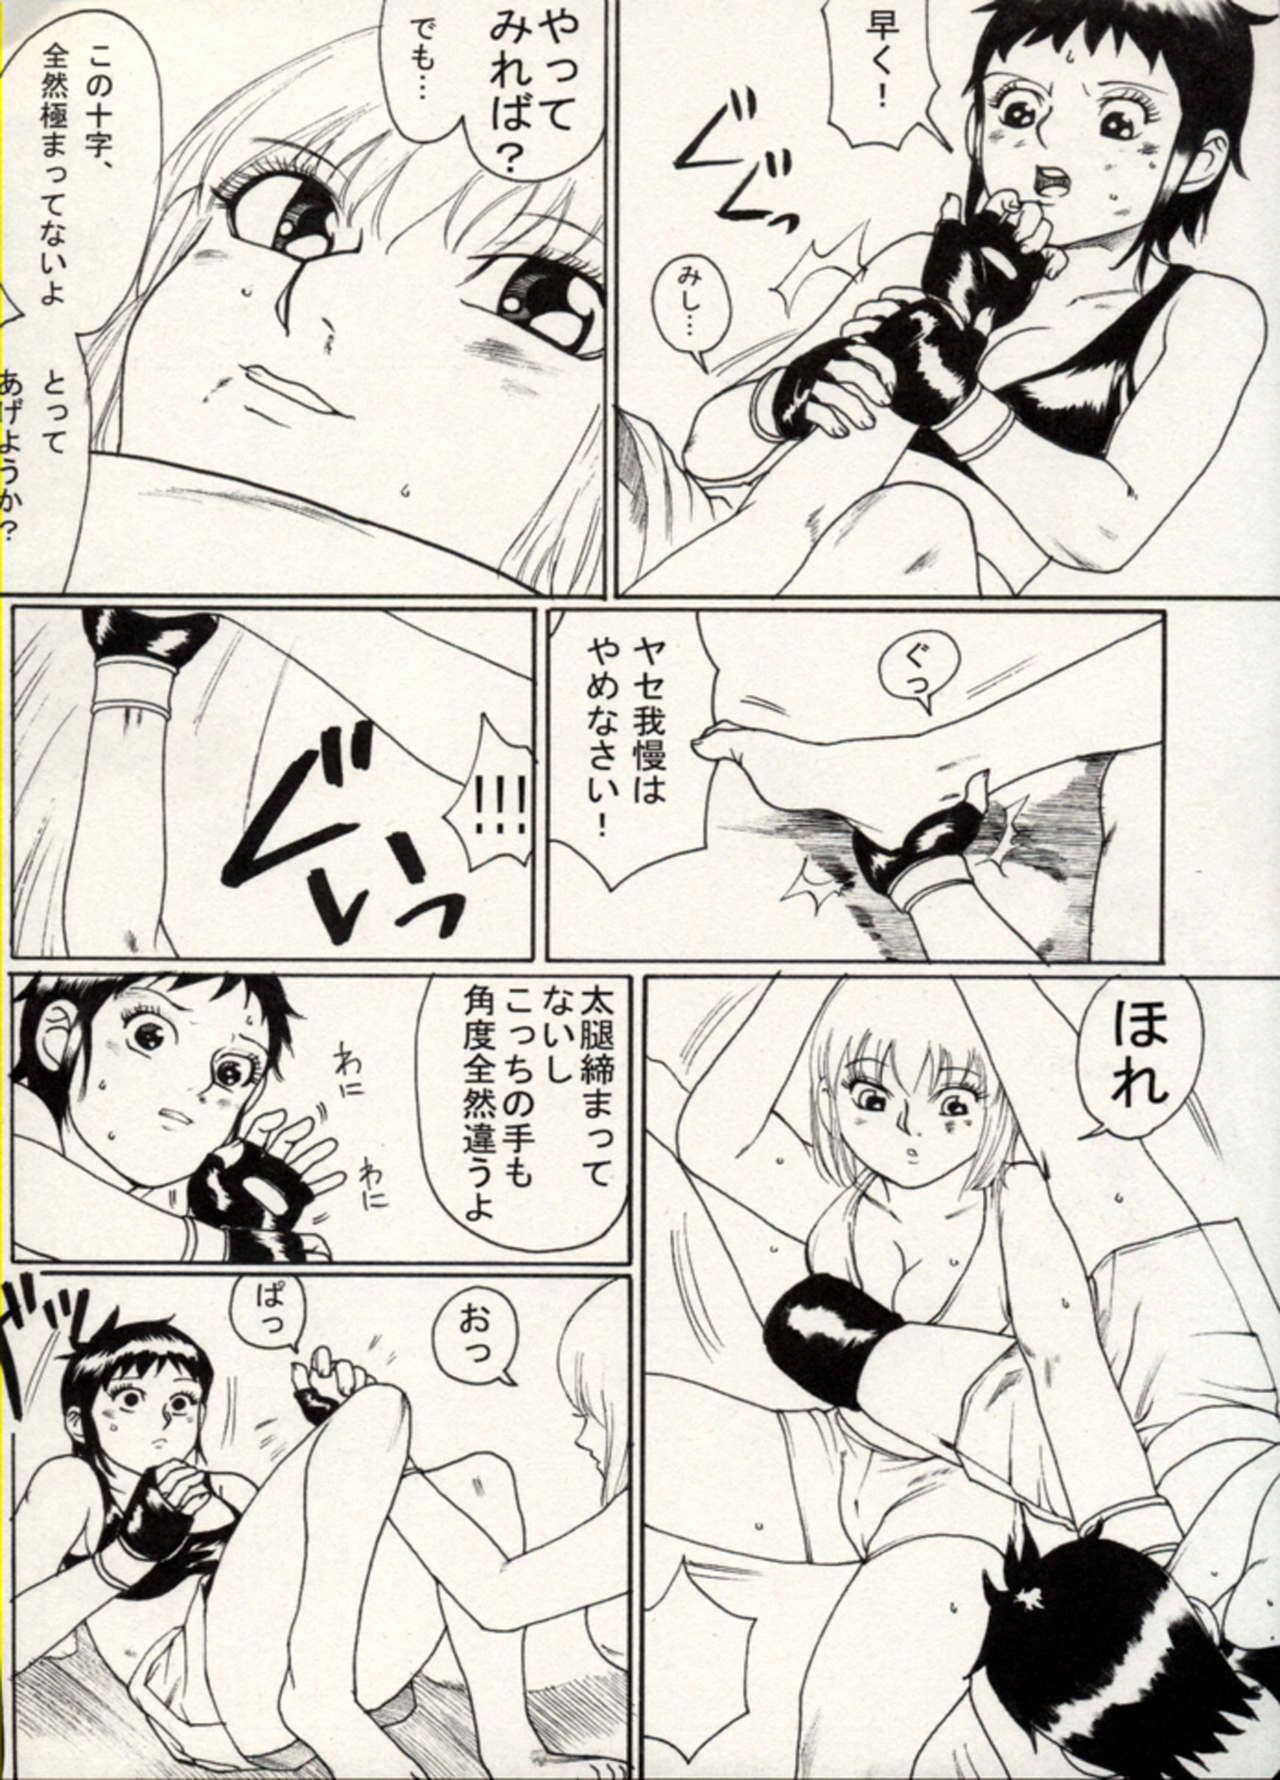 Manga Battle Volume 15 80